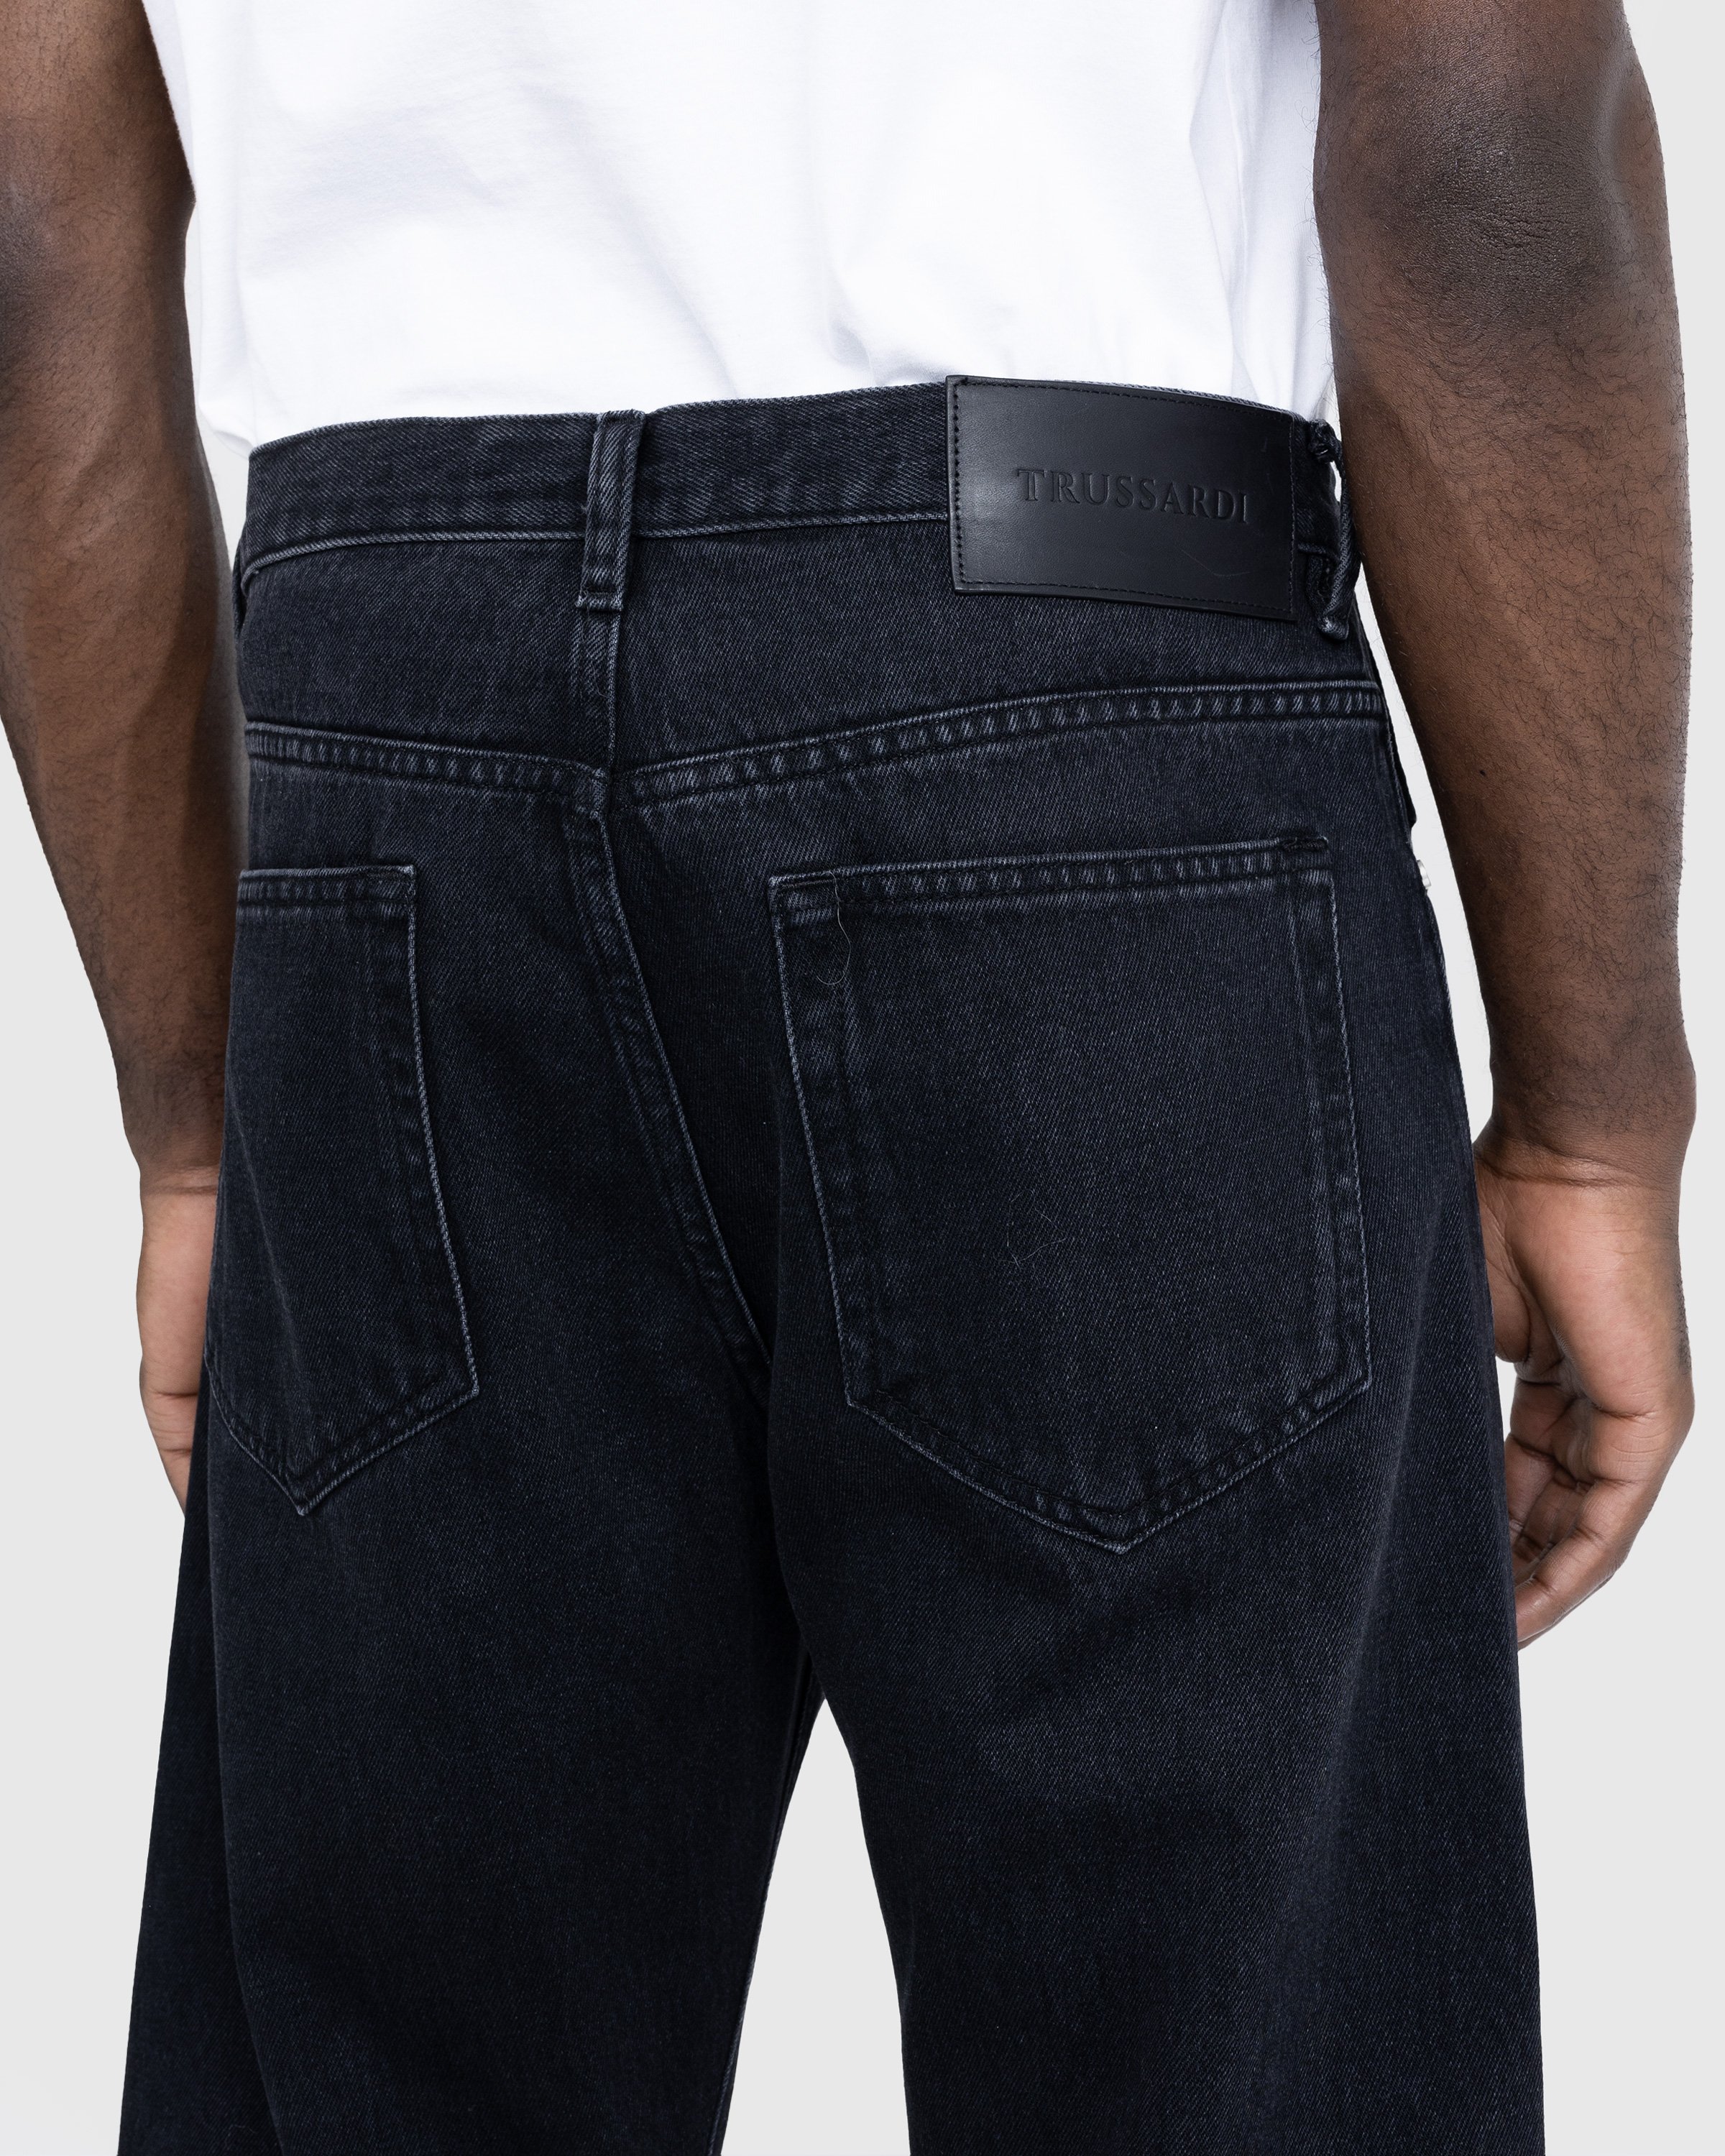 Trussardi - Five-Pocket Twisted Tapered Jeans Black Rigid - Clothing - Black - Image 5